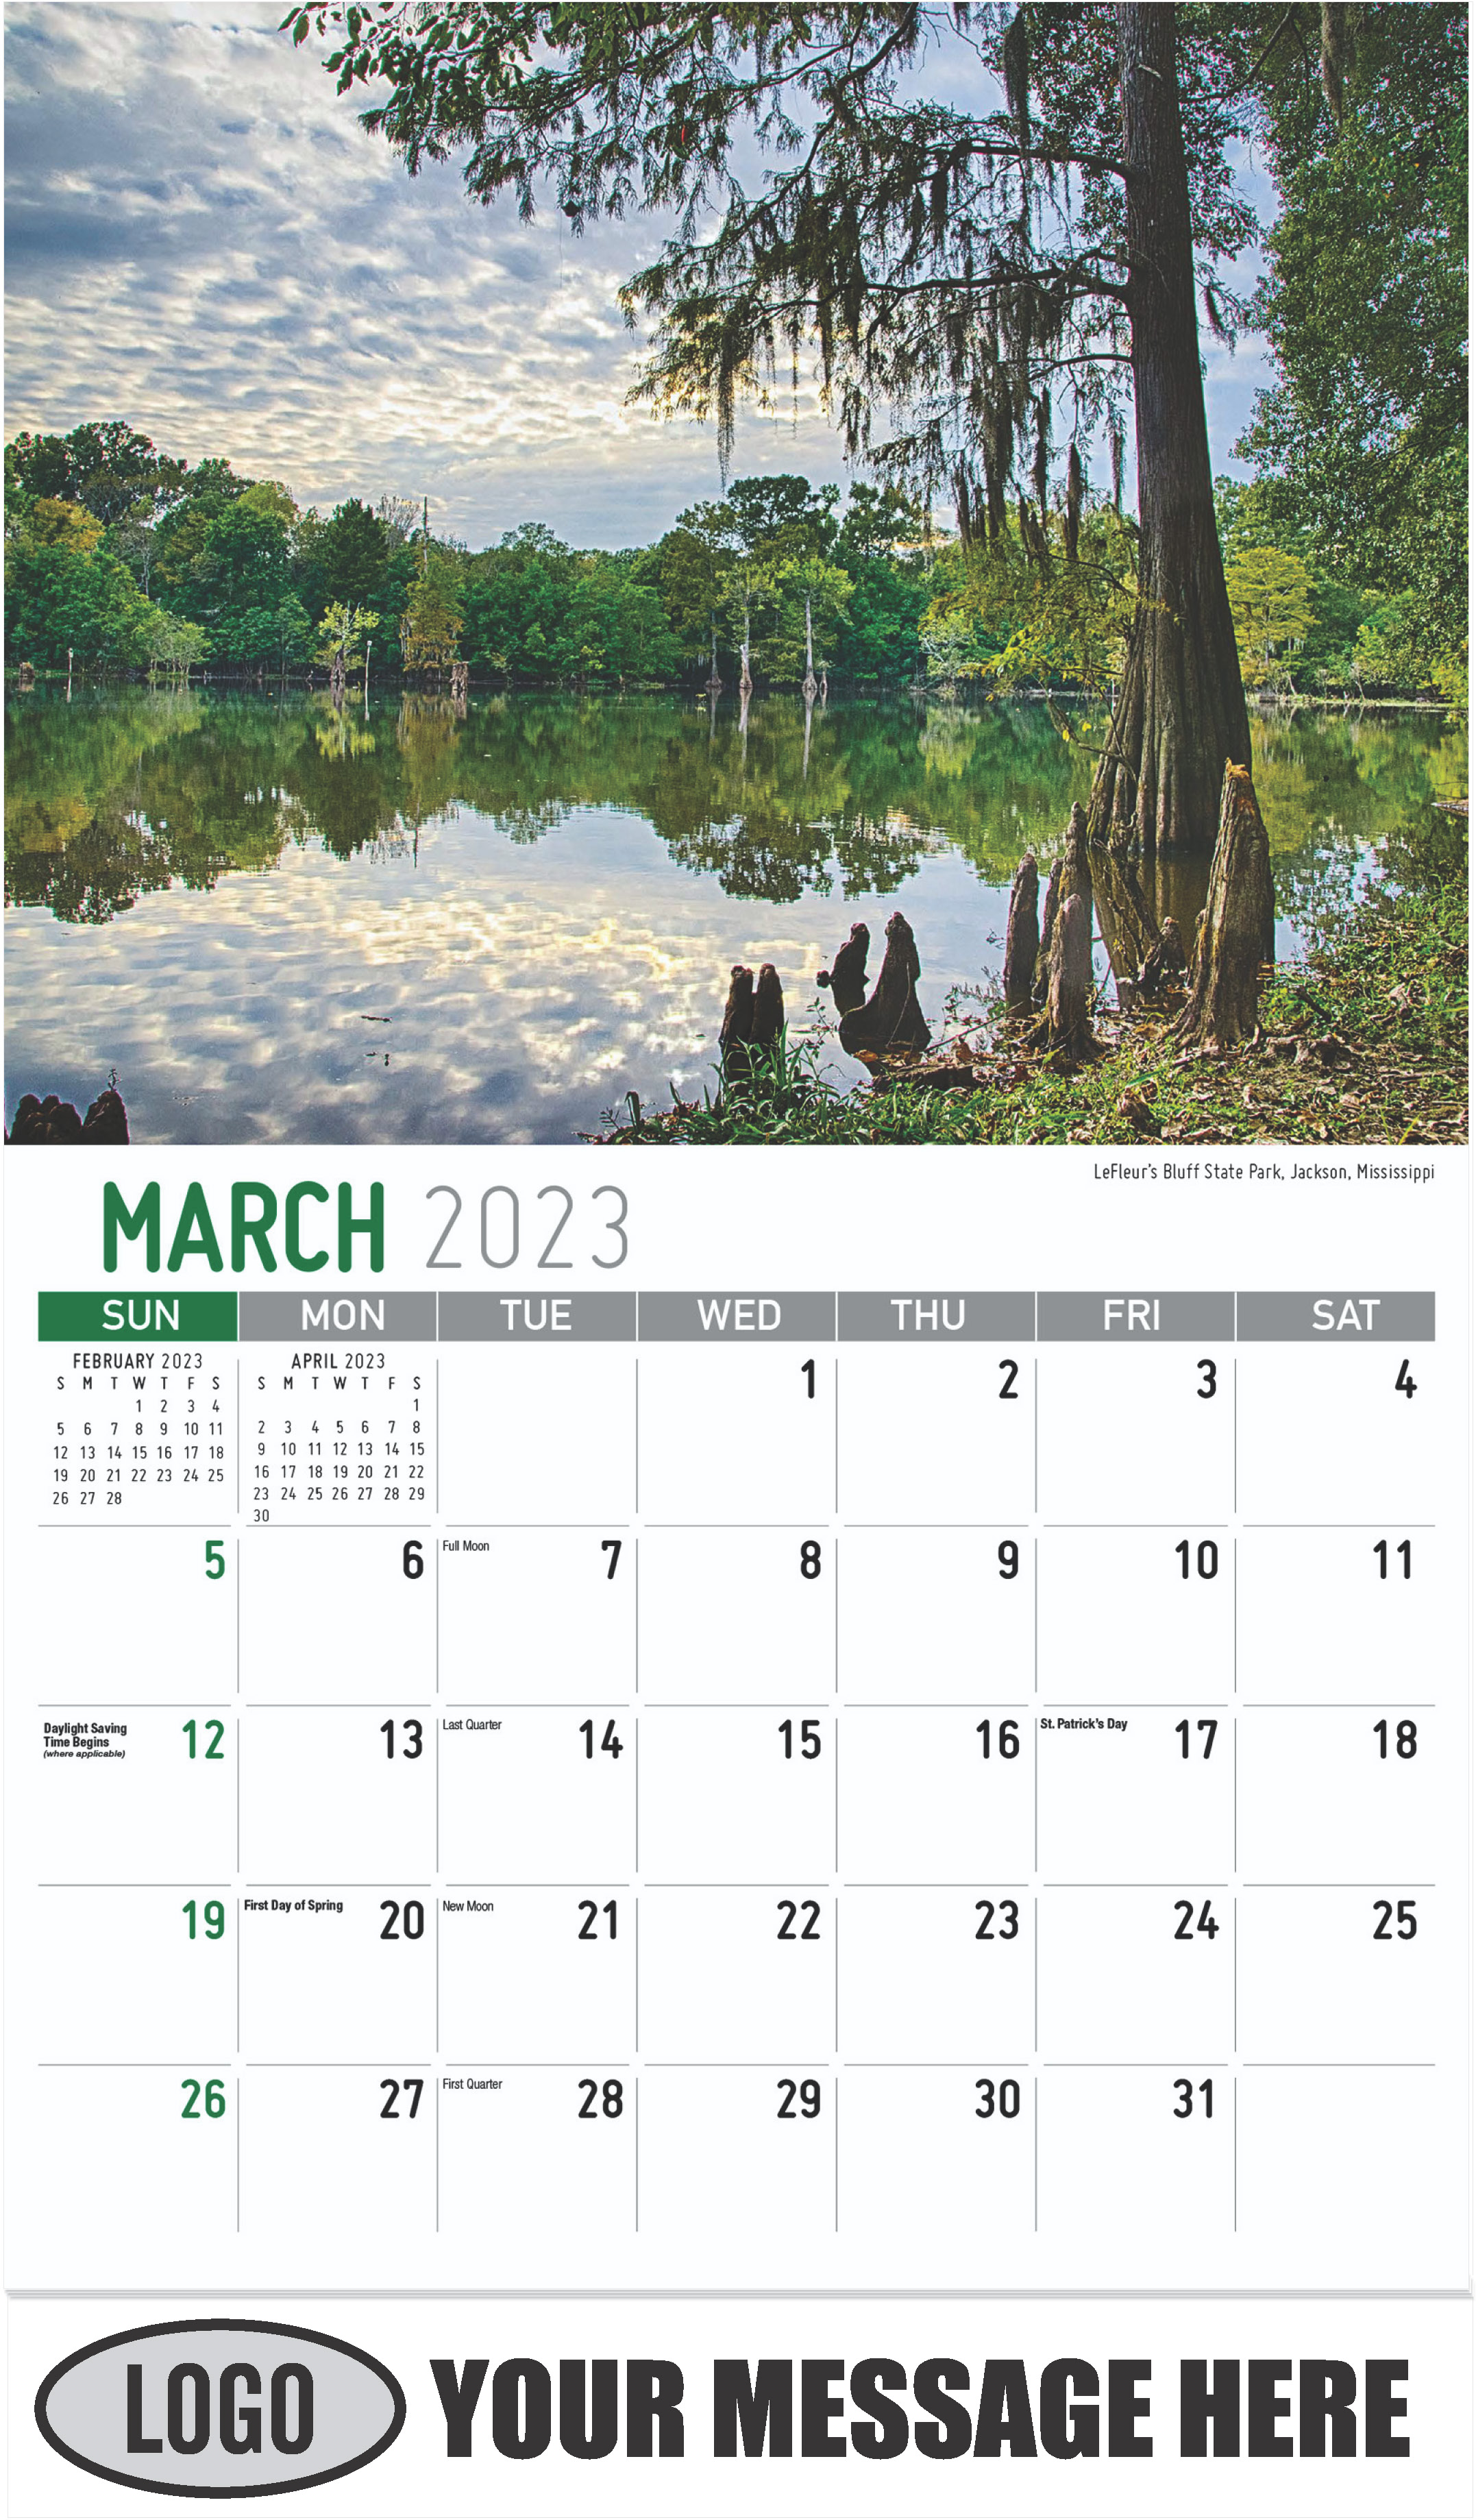 LeFleur’s Bluff State Park, Jackson, Mississippi - March - Scenes of Southeast USA 2023 Promotional Calendar